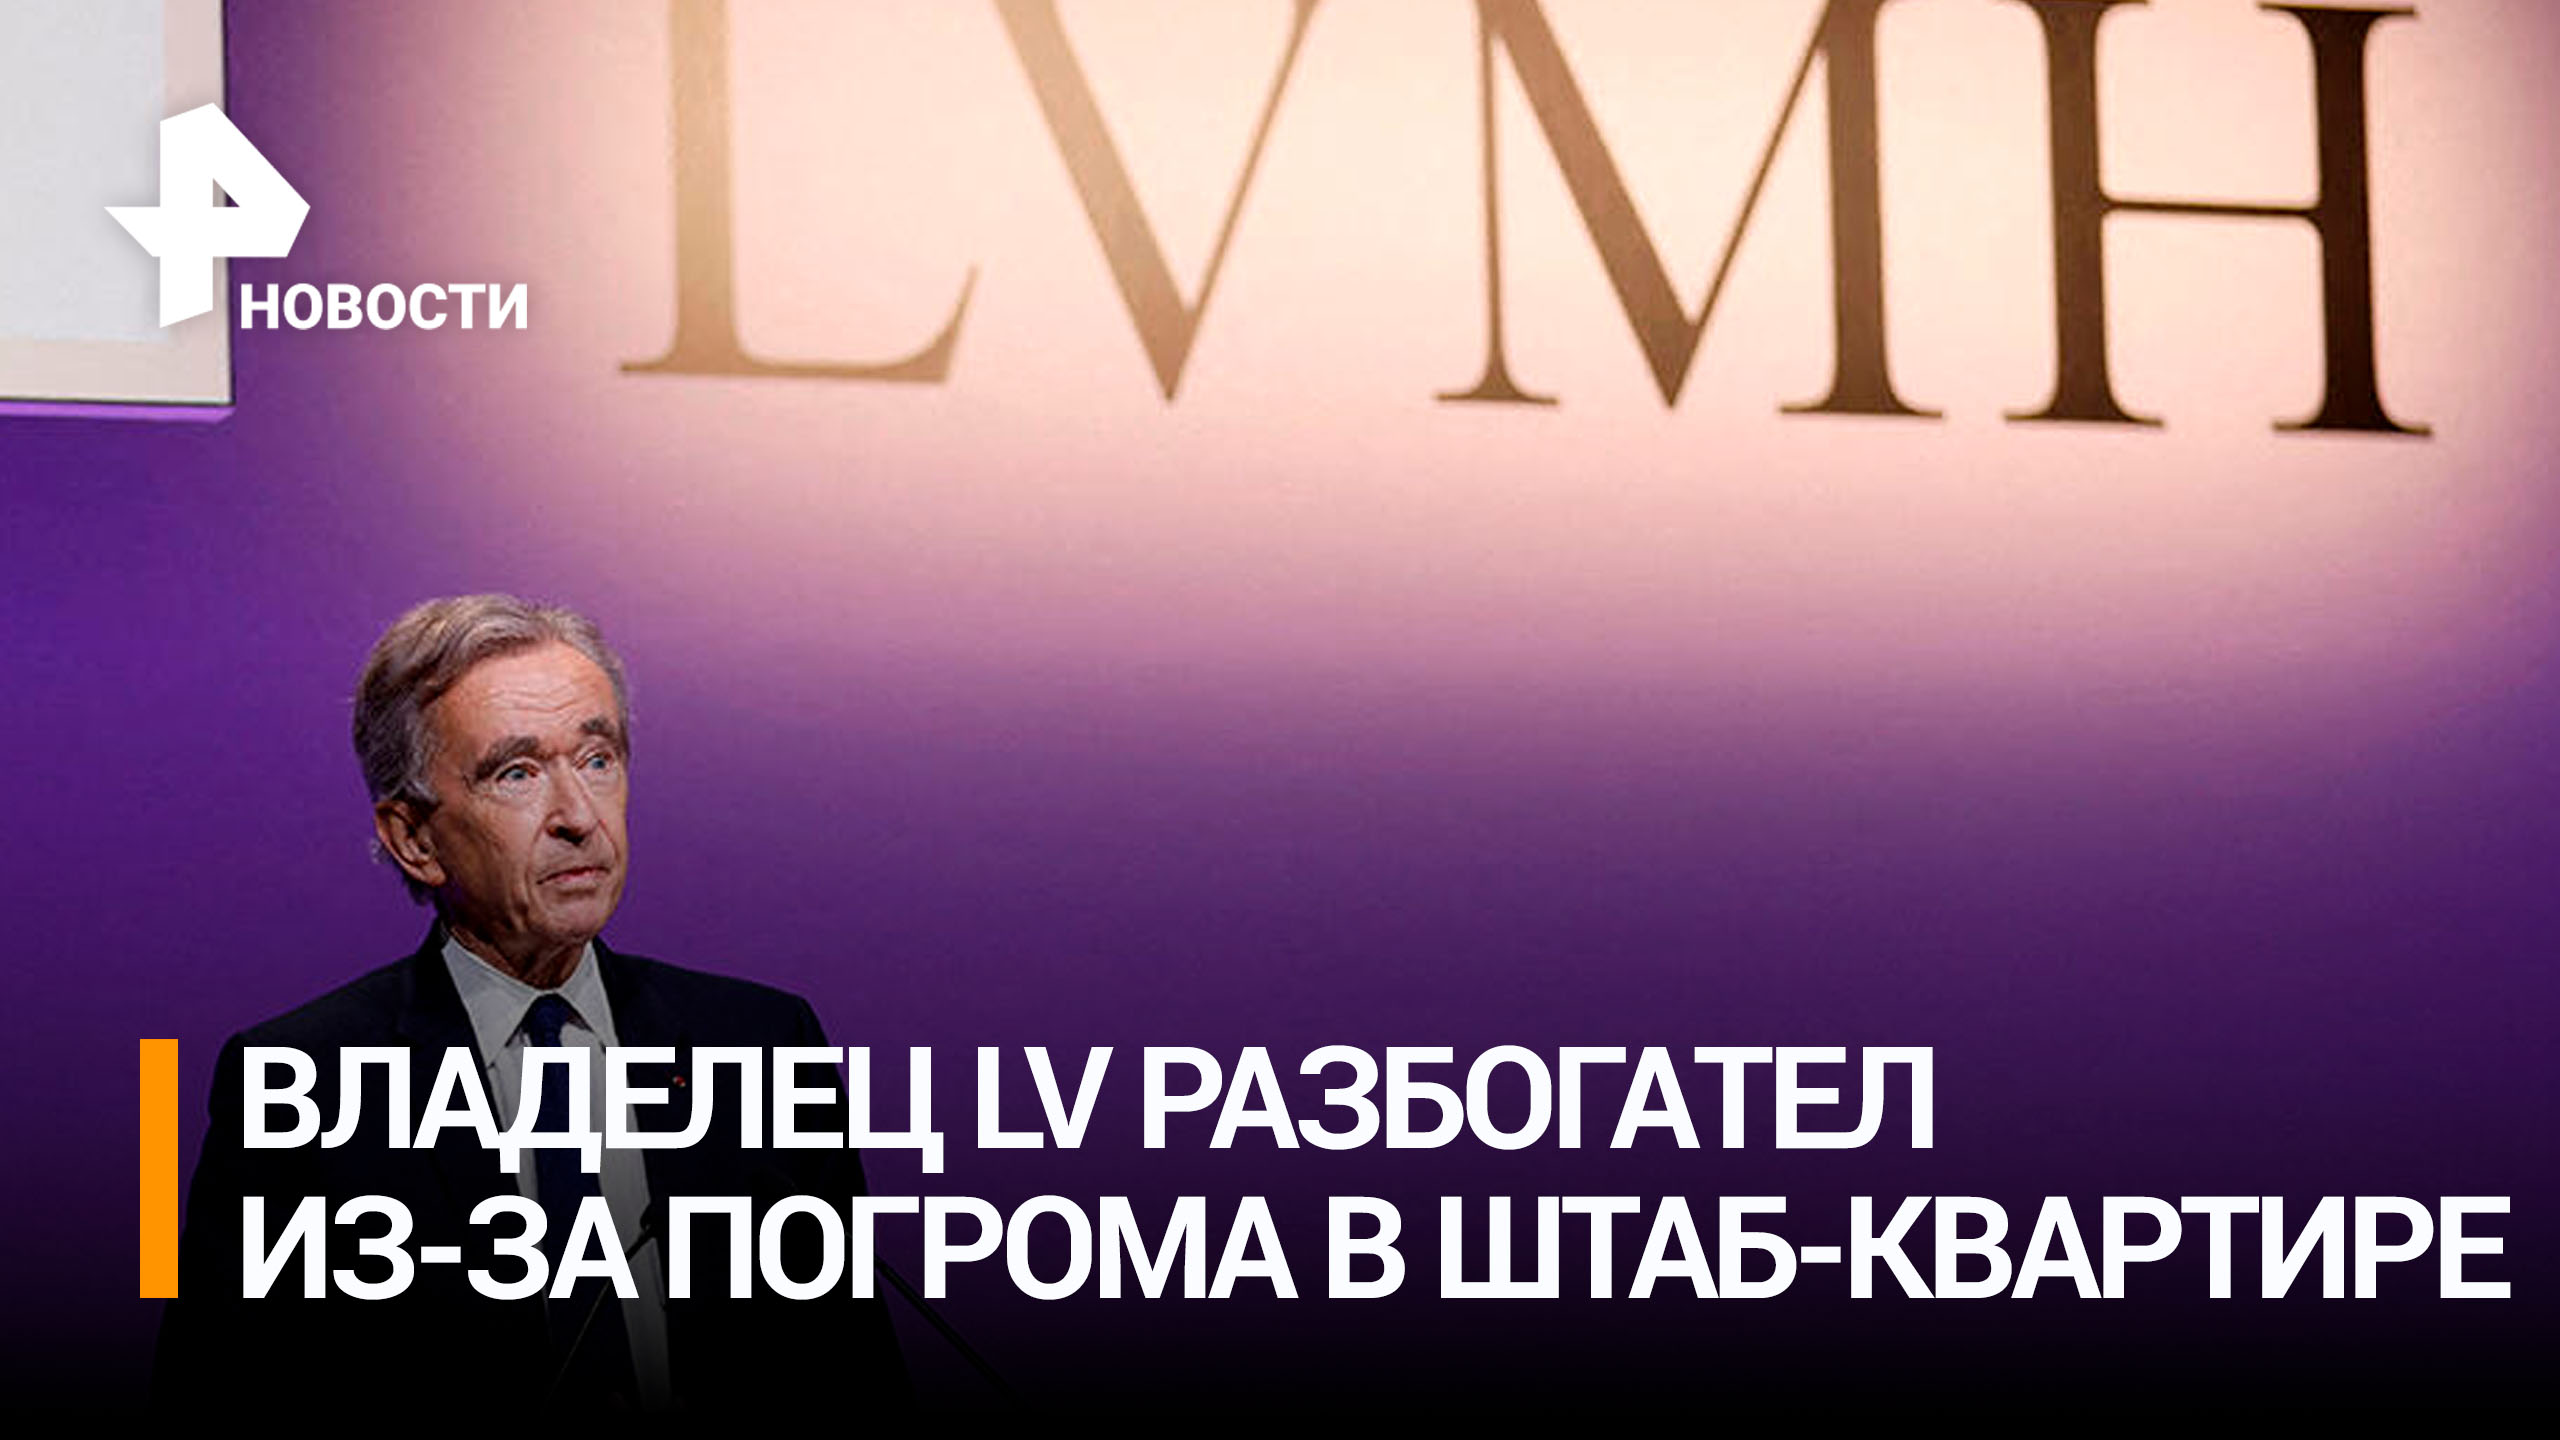 Владелец Louis Vuitton за день разбогател на $14 млрд на фоне погрома в офисе / РЕН Новости